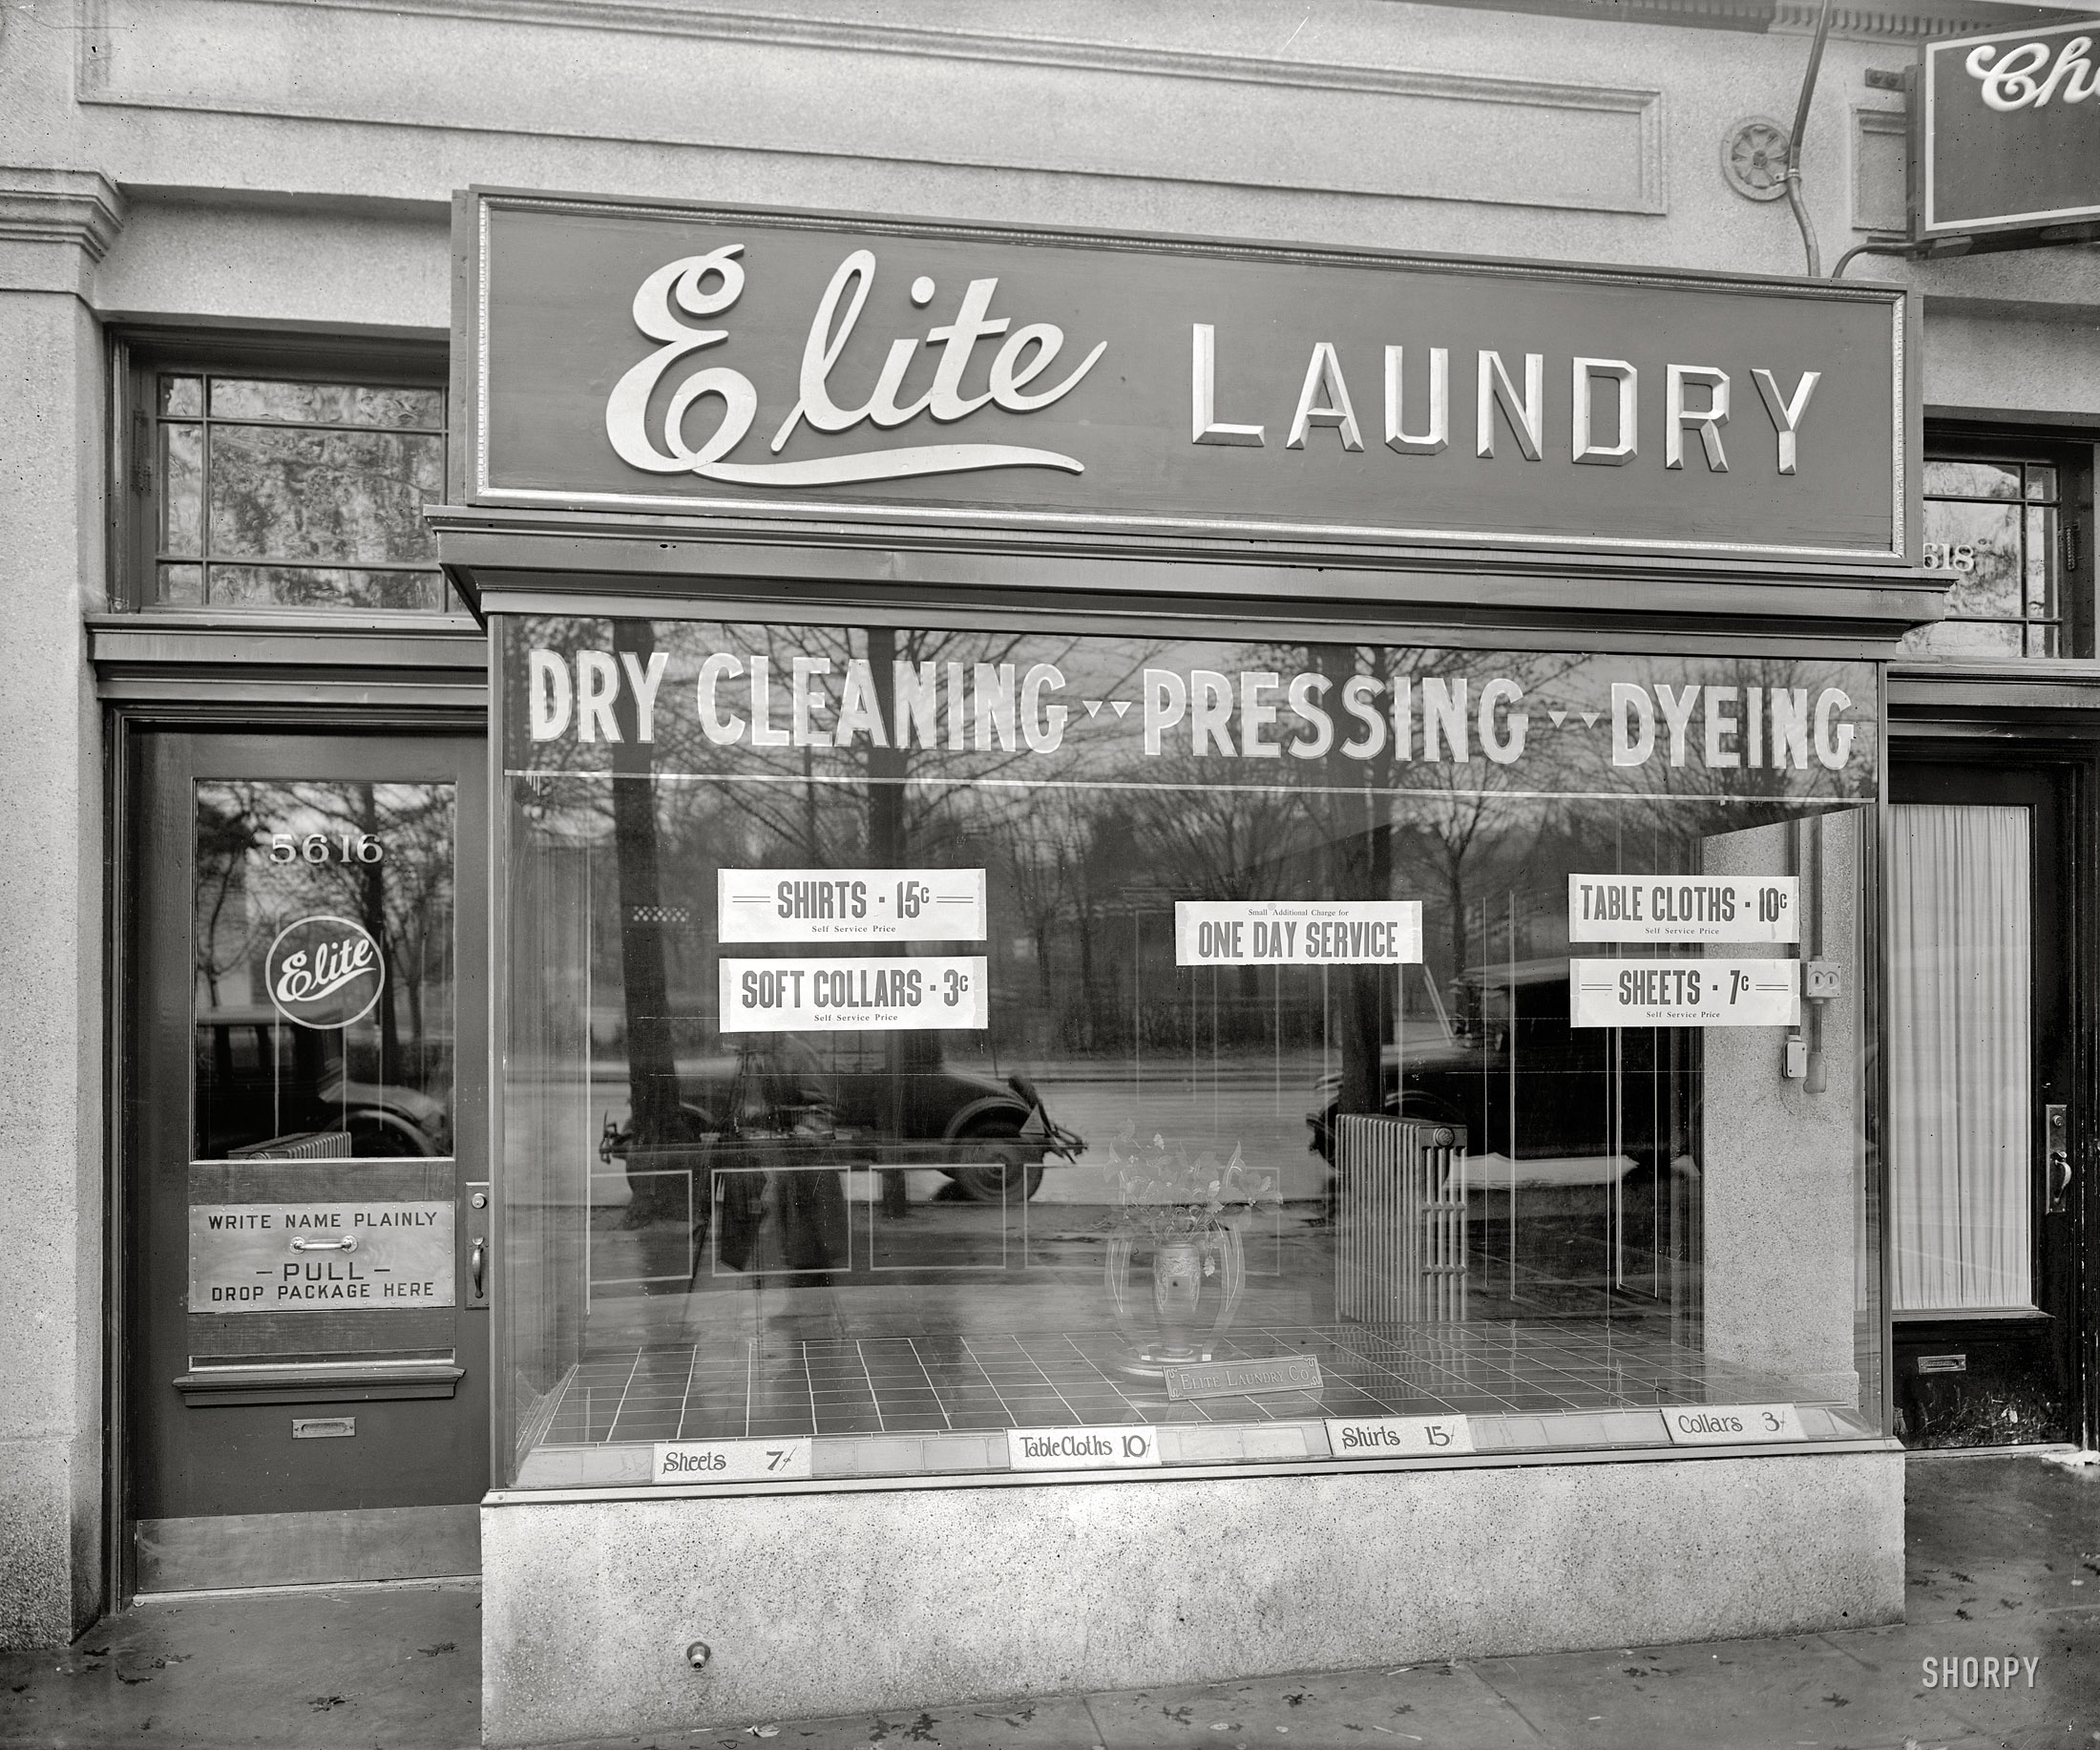 Washington, D.C., circa 1924. "Palace Laundry (Elite Laundry)." Soft collars, 3¢. National Photo Company Collection glass negative. View full size.